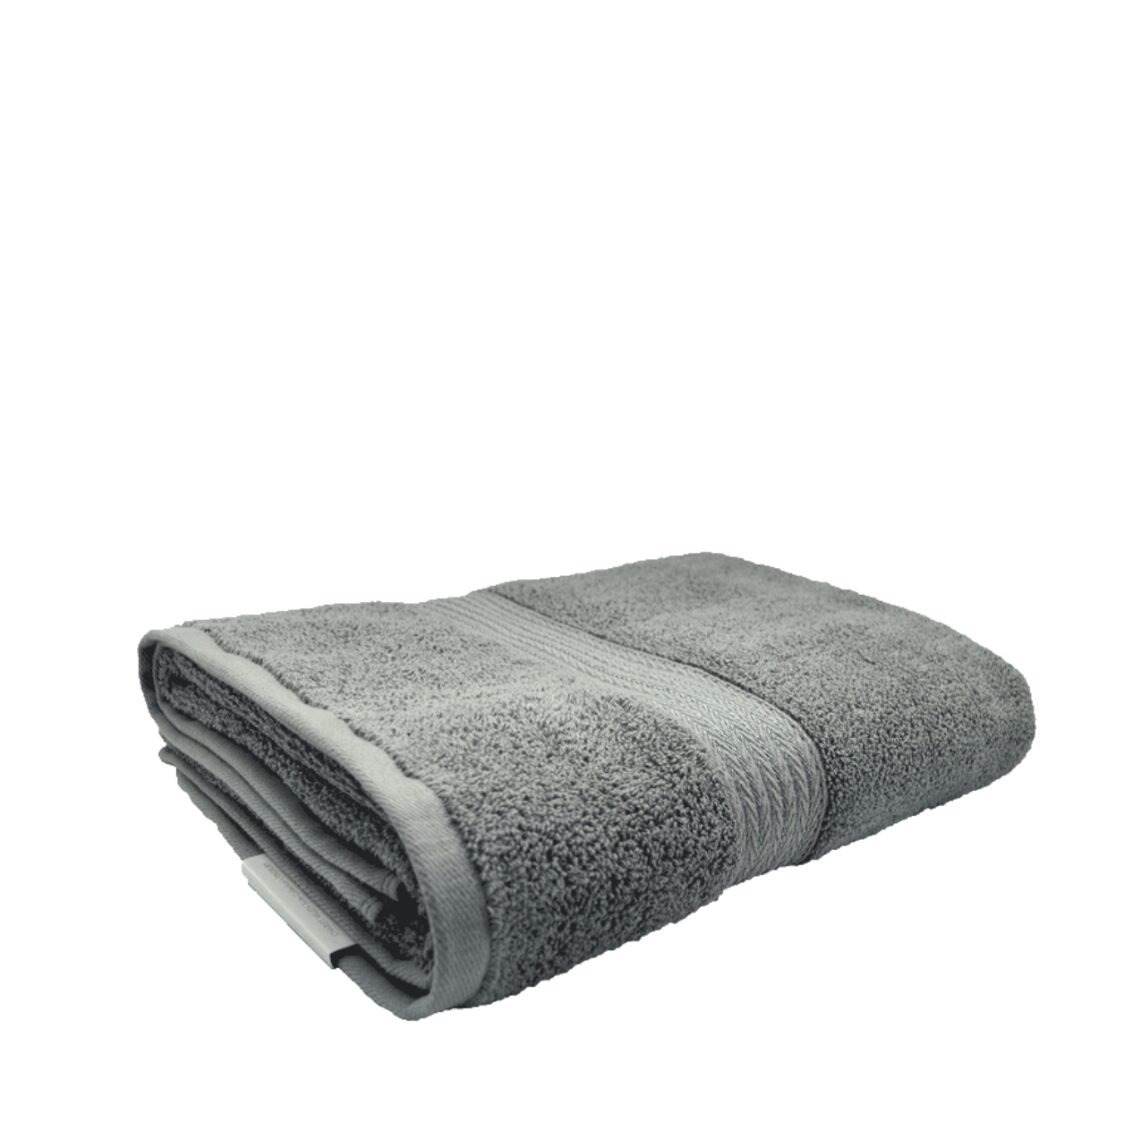 Charles Millen Suite Collection Finsbury Bath Towel 76X137cm Smokey Grey Set Of 2